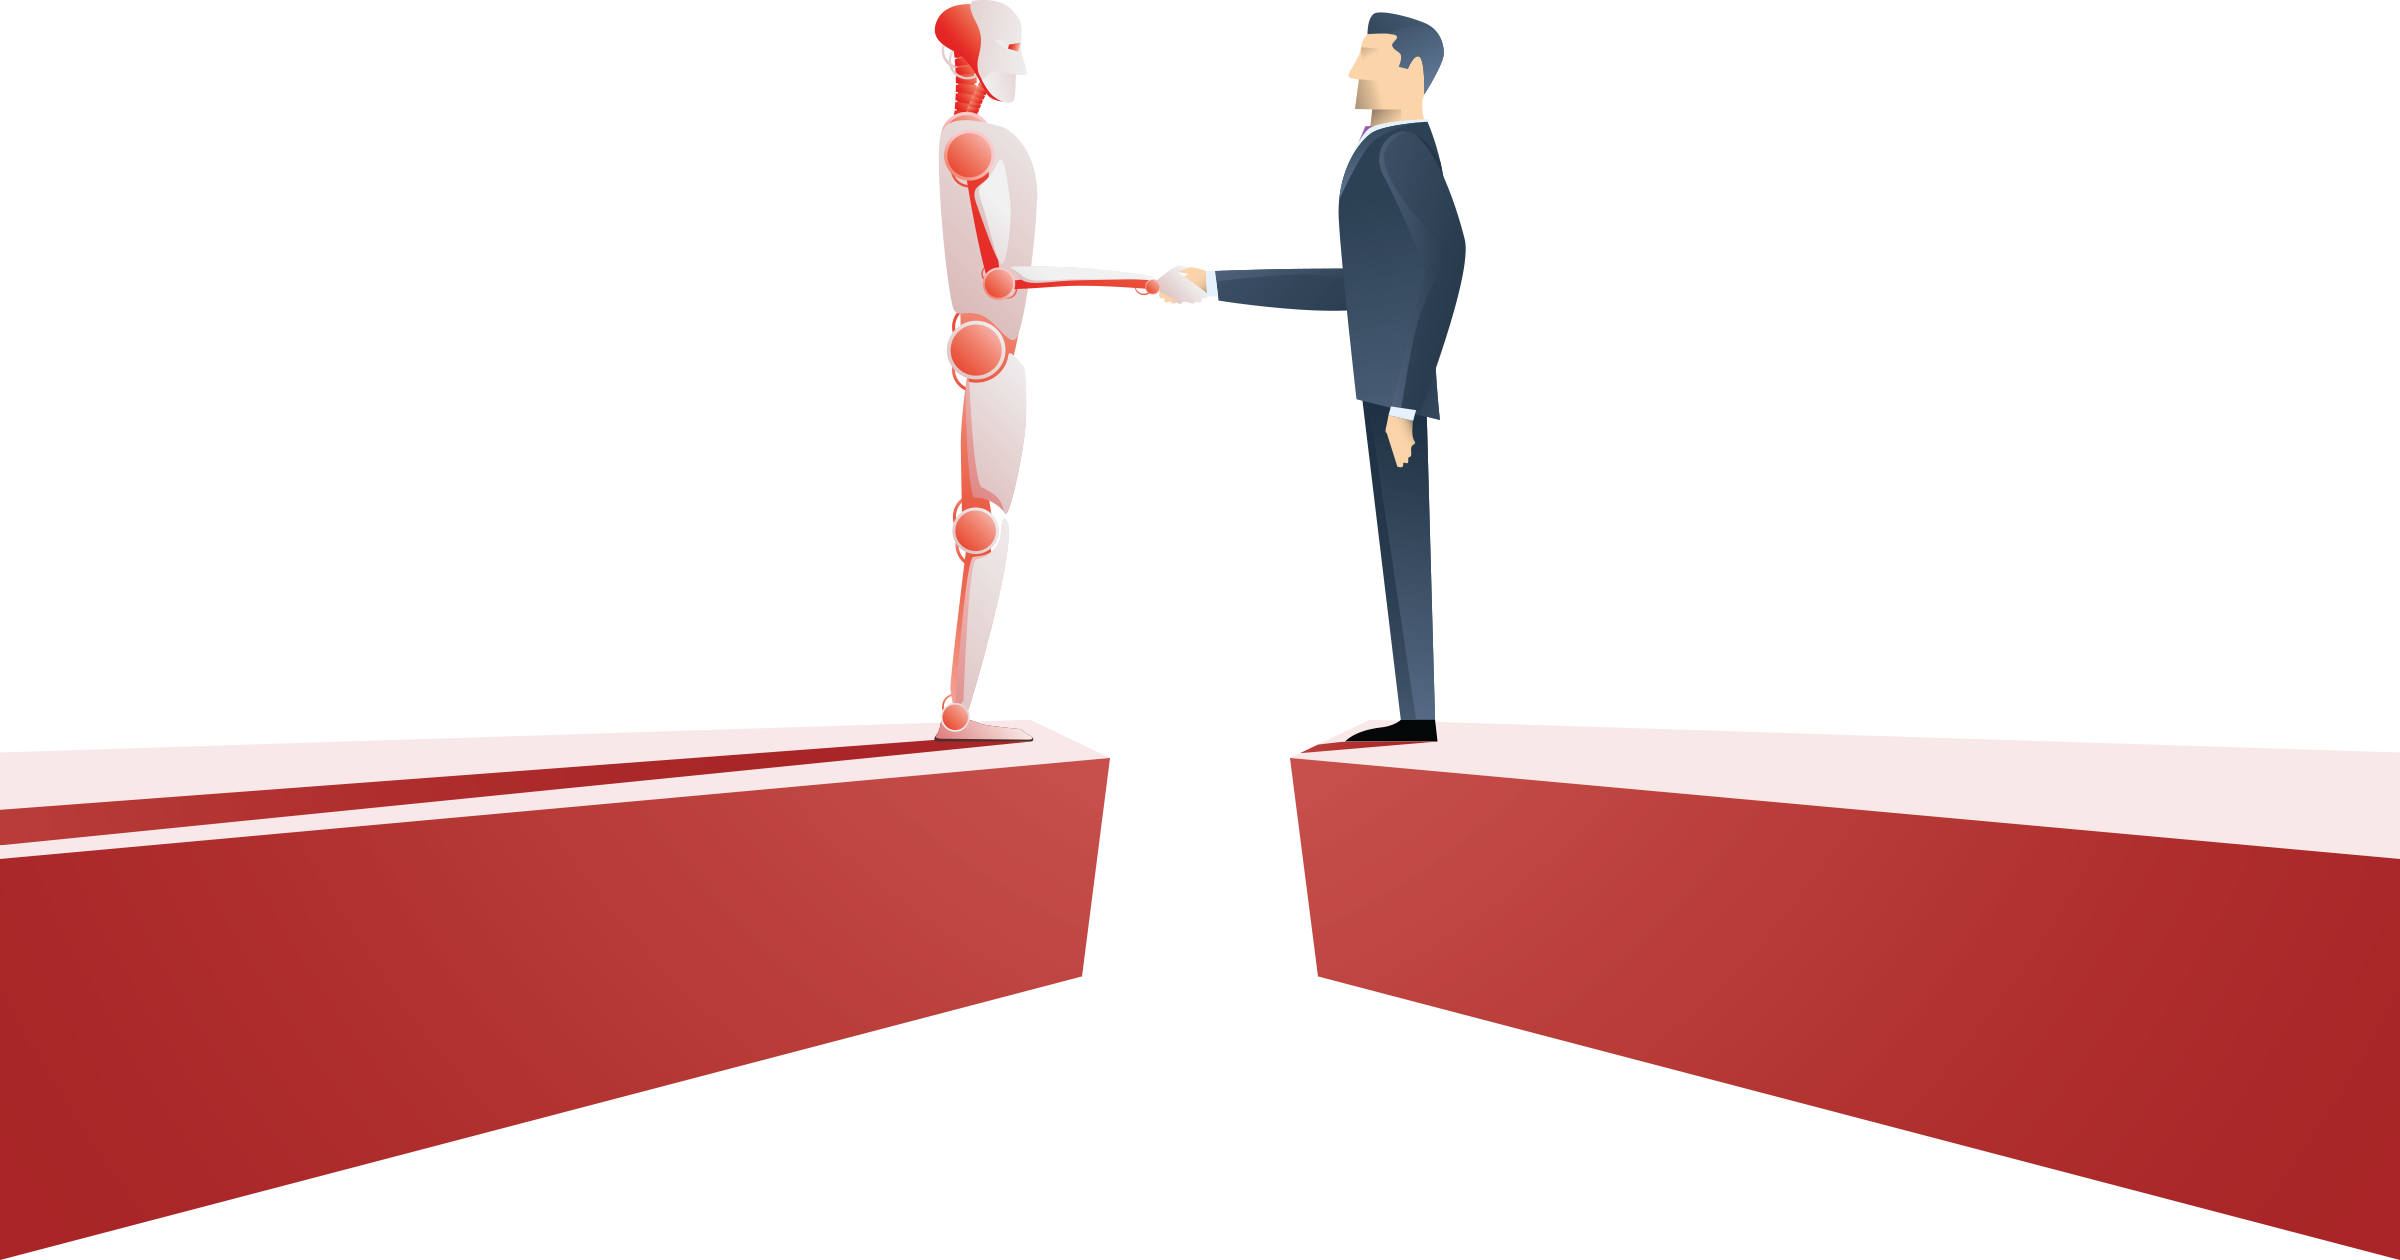 Robot and Human Meeting on Bridge to Shake Hands